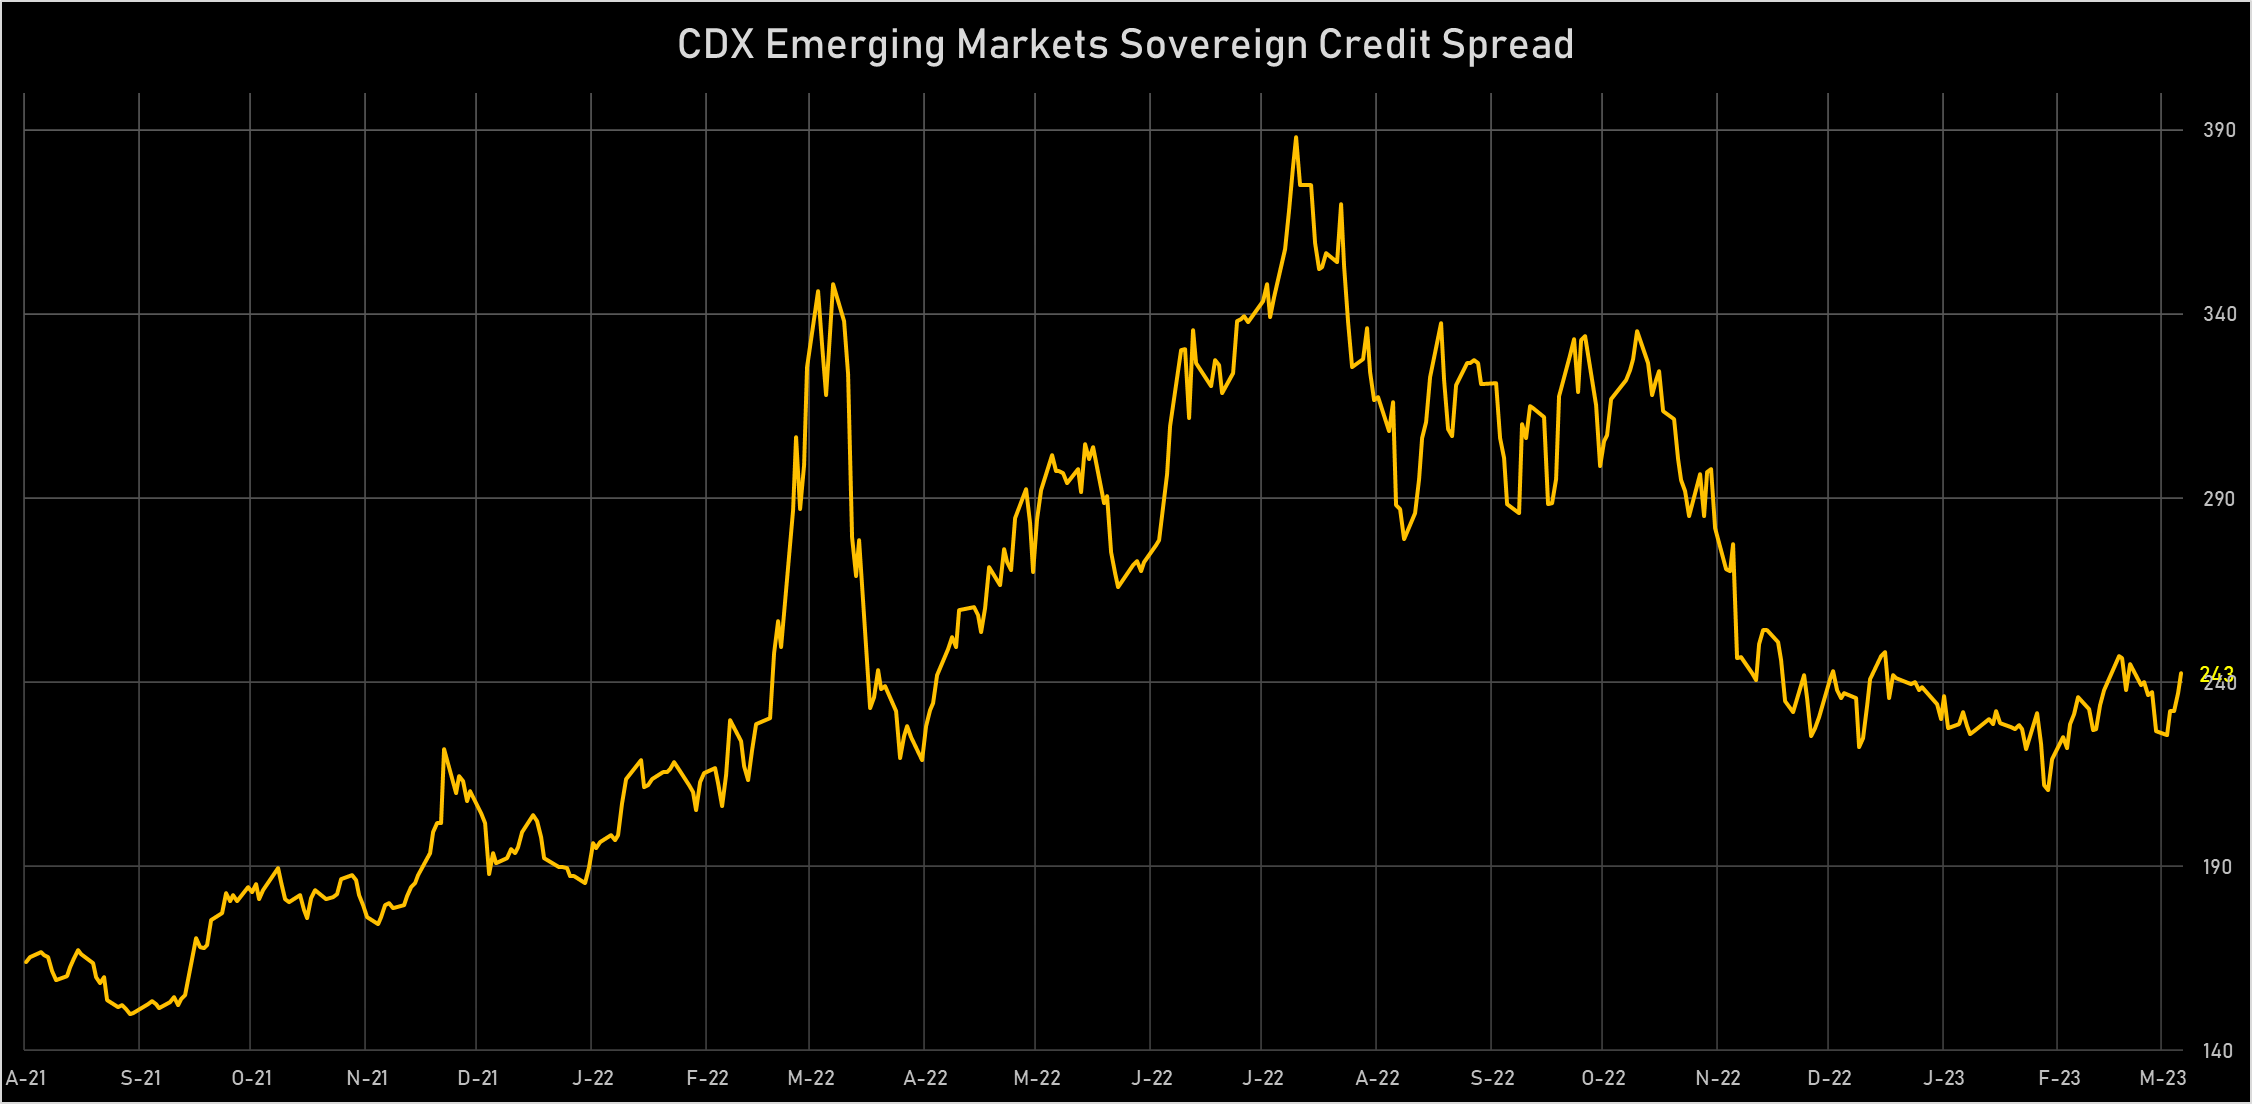 CDX EM Sovereign Credit Spread | Sources: phipost.com, Refinitiv data